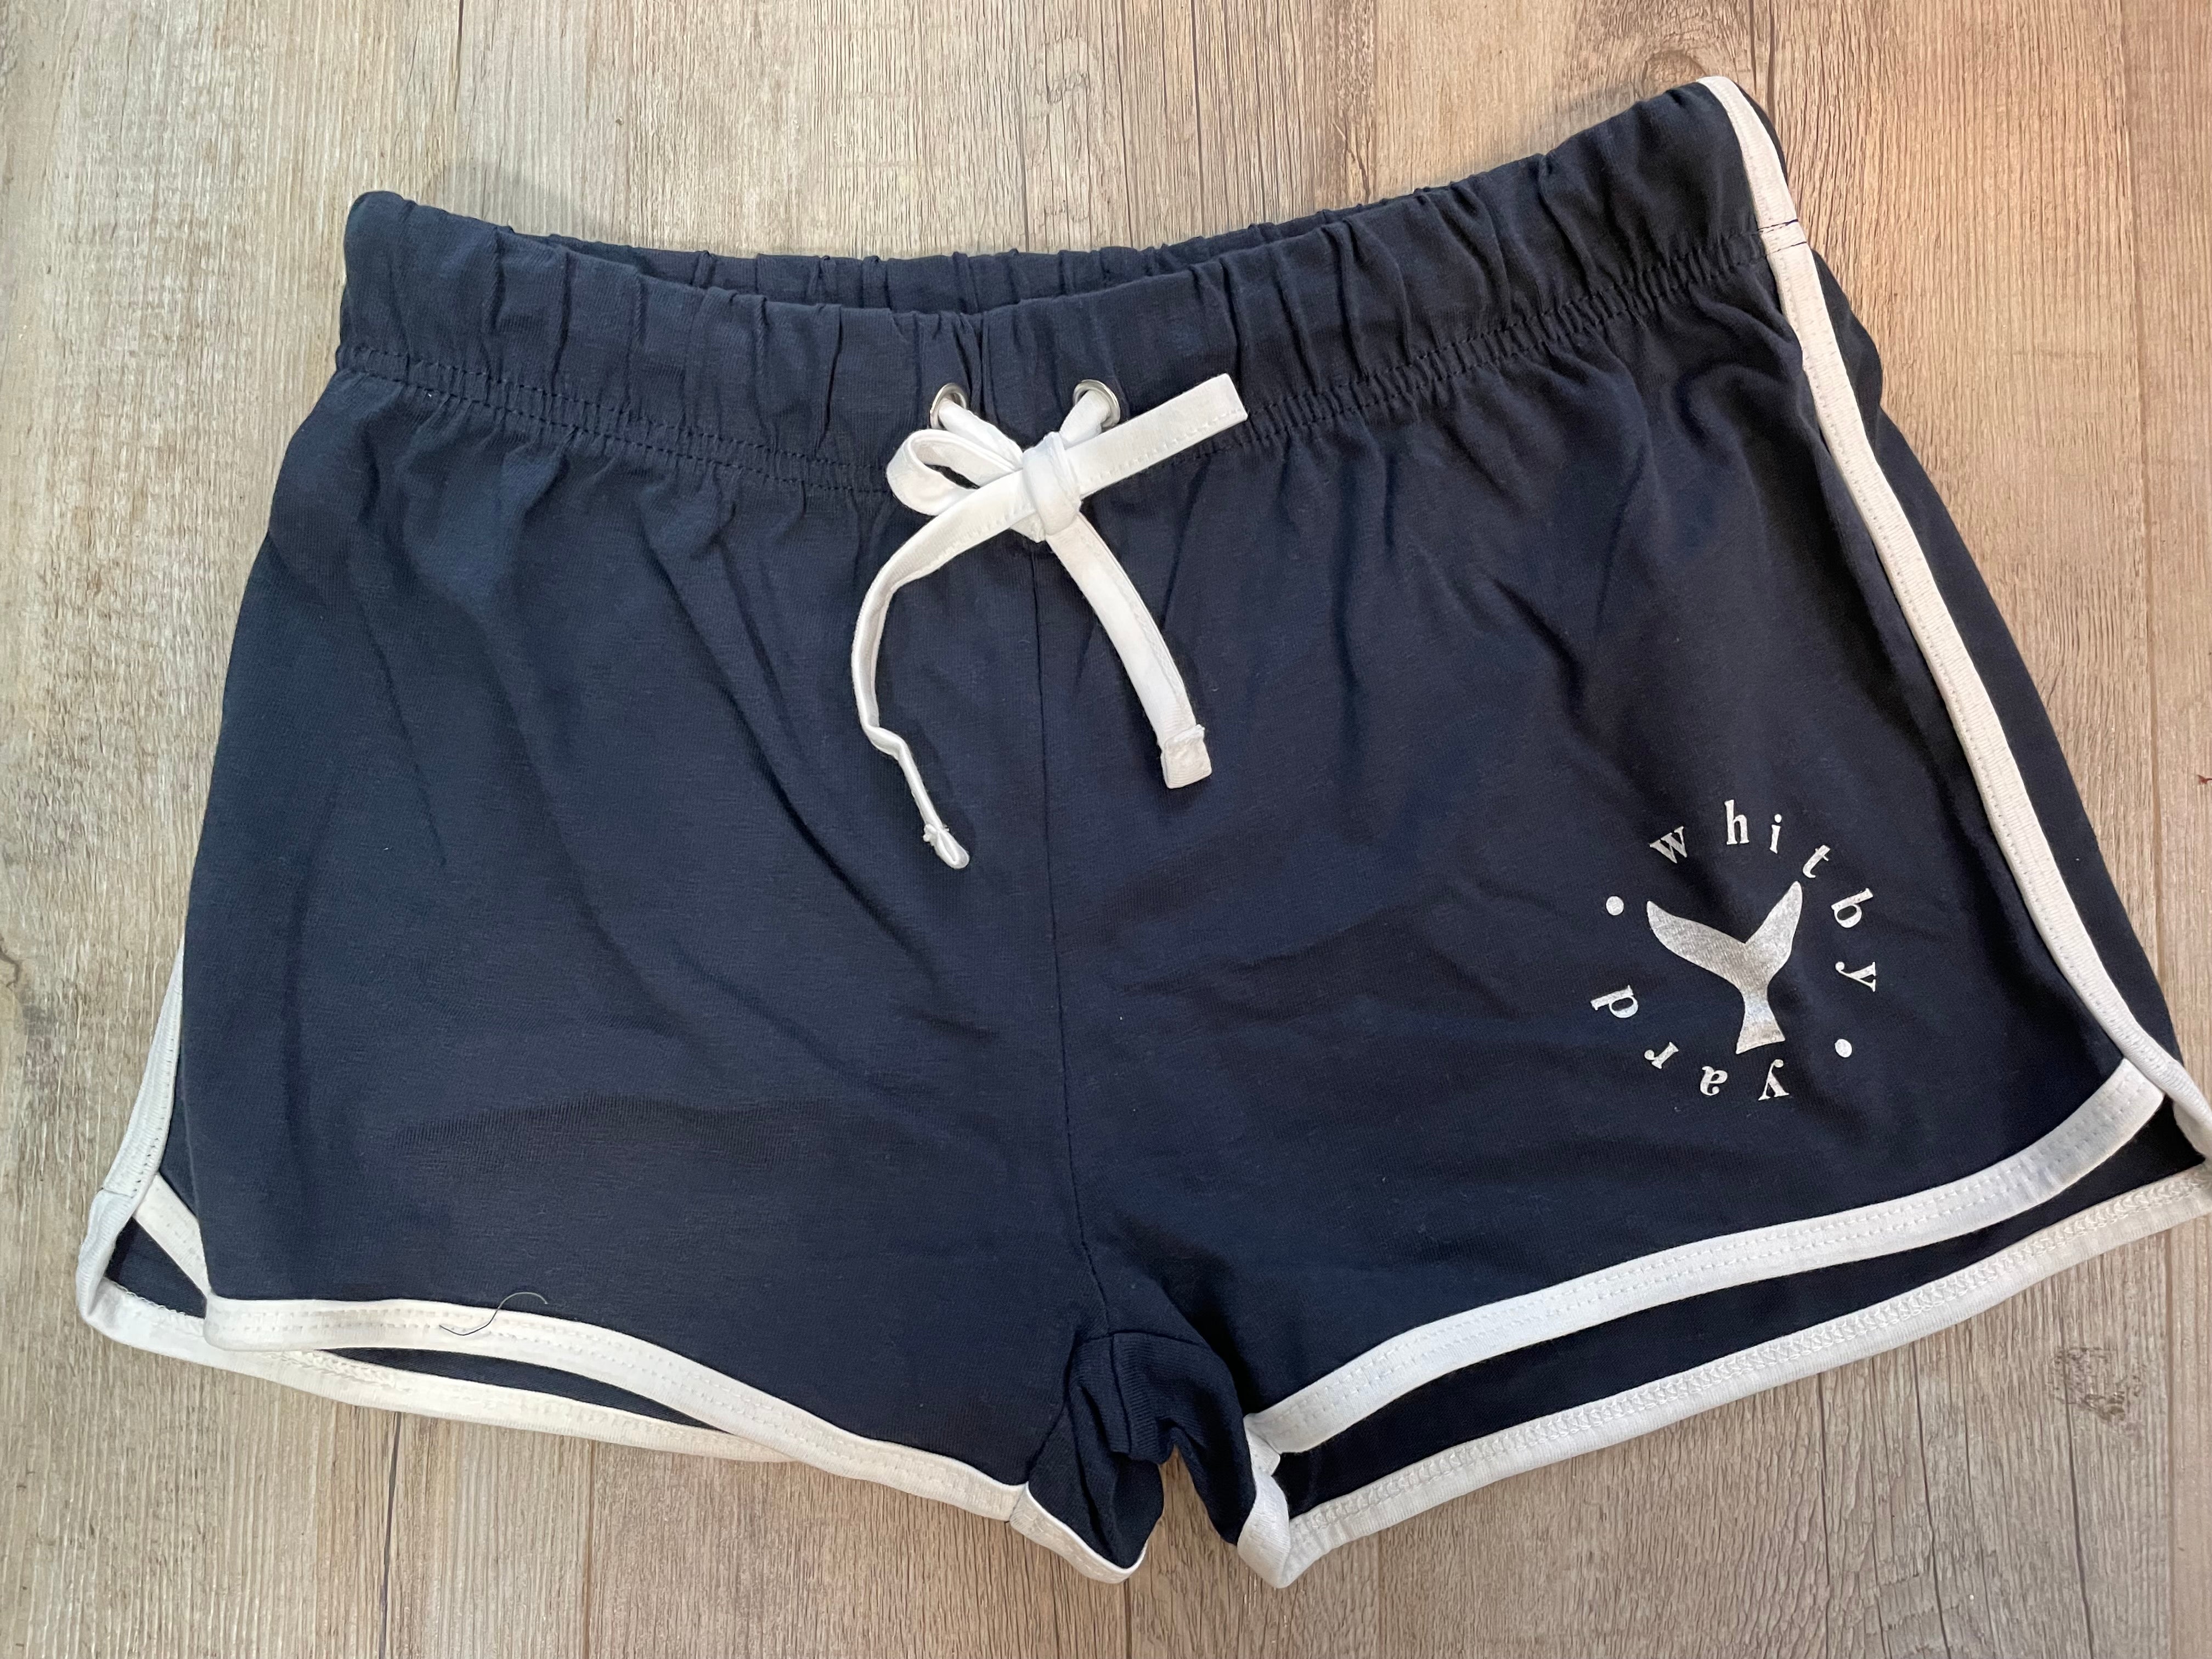 Women's navy/white jersey shorts